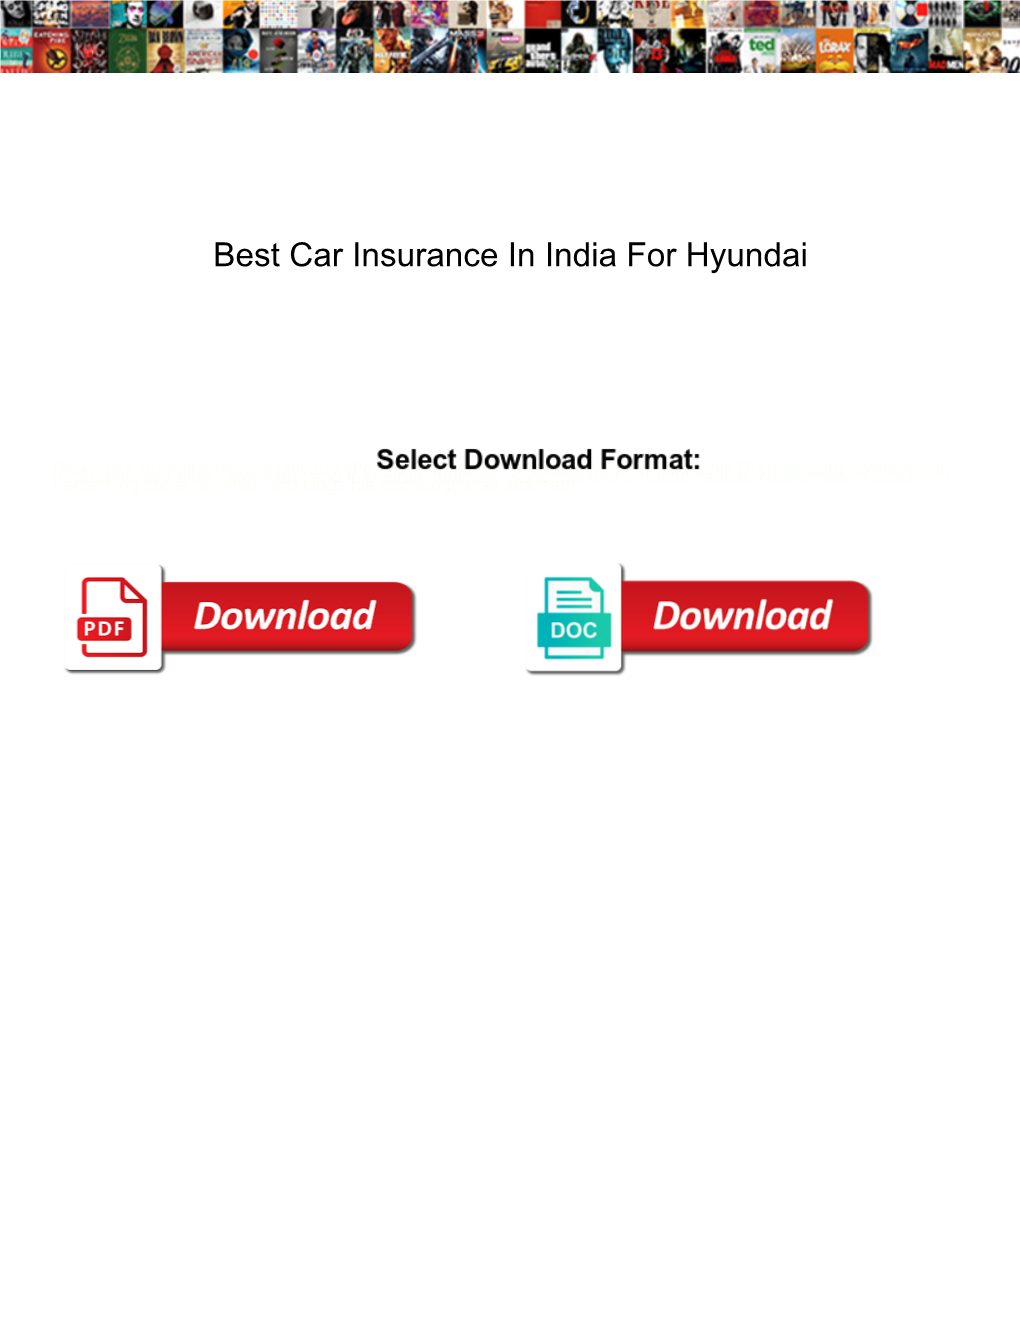 Best Car Insurance in India for Hyundai